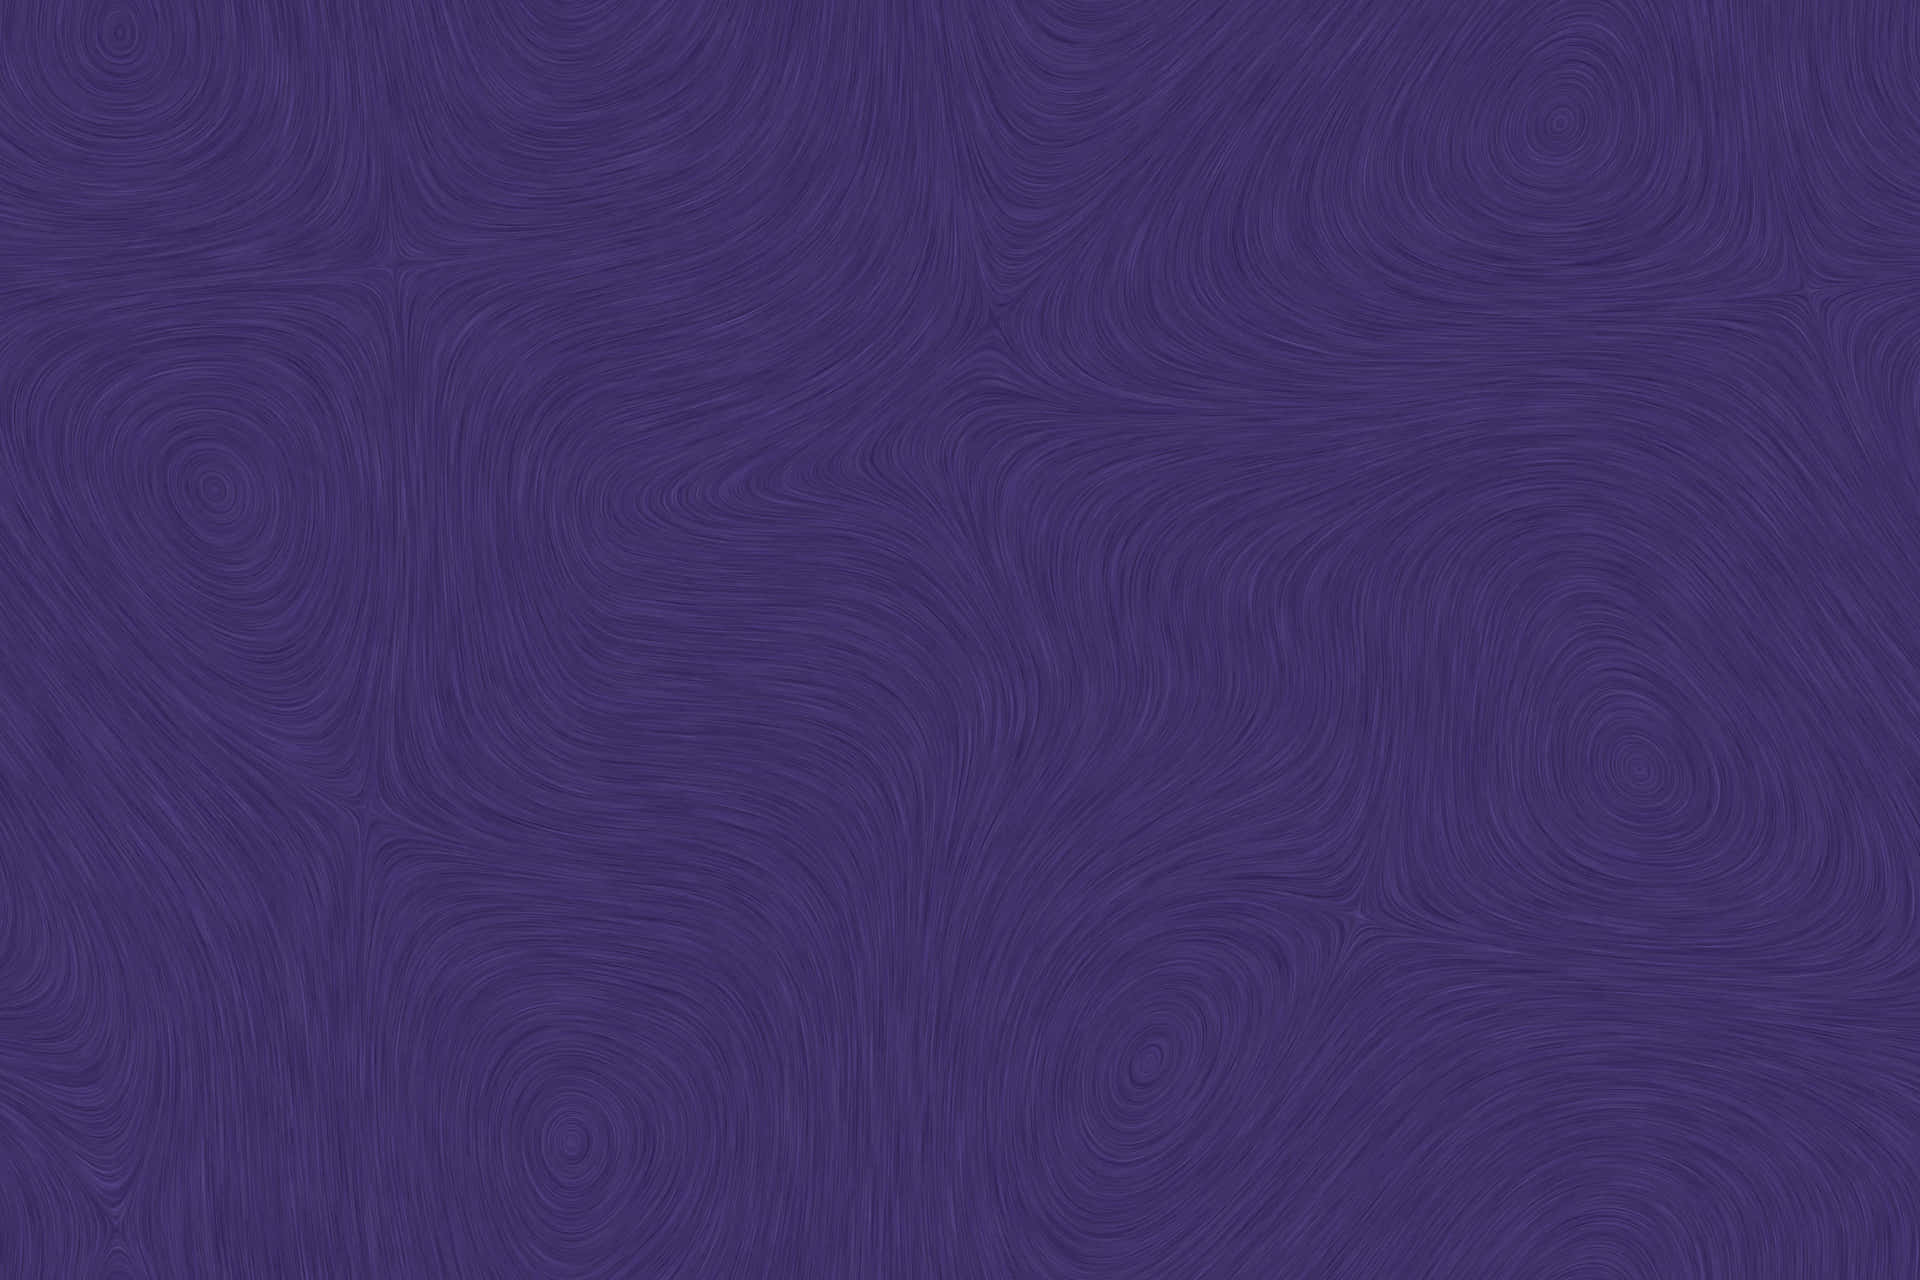 Purple Swirls On A Background